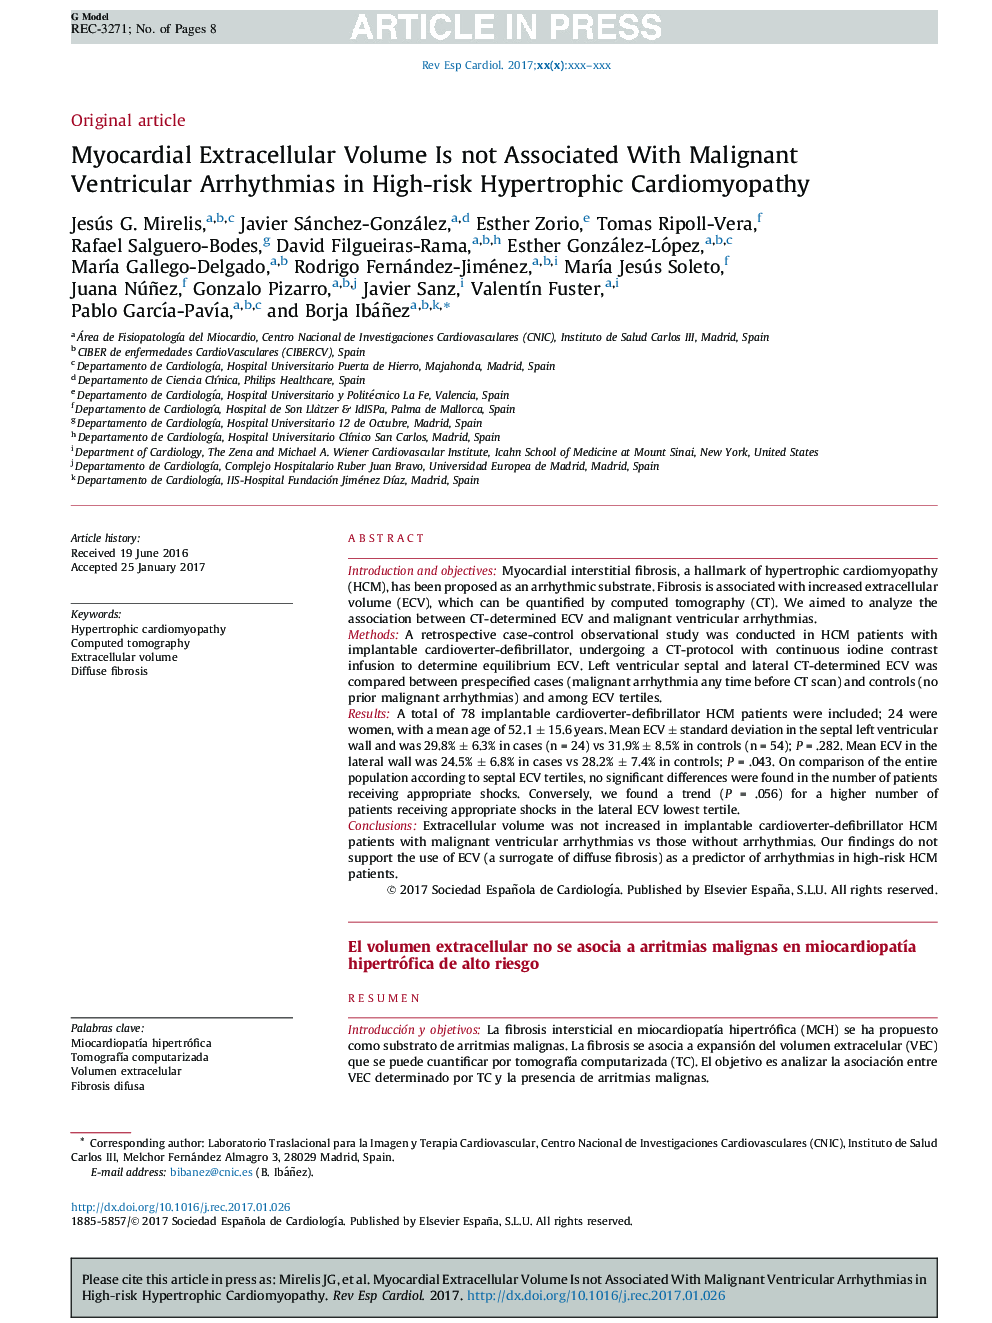 Myocardial Extracellular Volume Is Not Associated With Malignant Ventricular Arrhythmias in High-risk Hypertrophic Cardiomyopathy